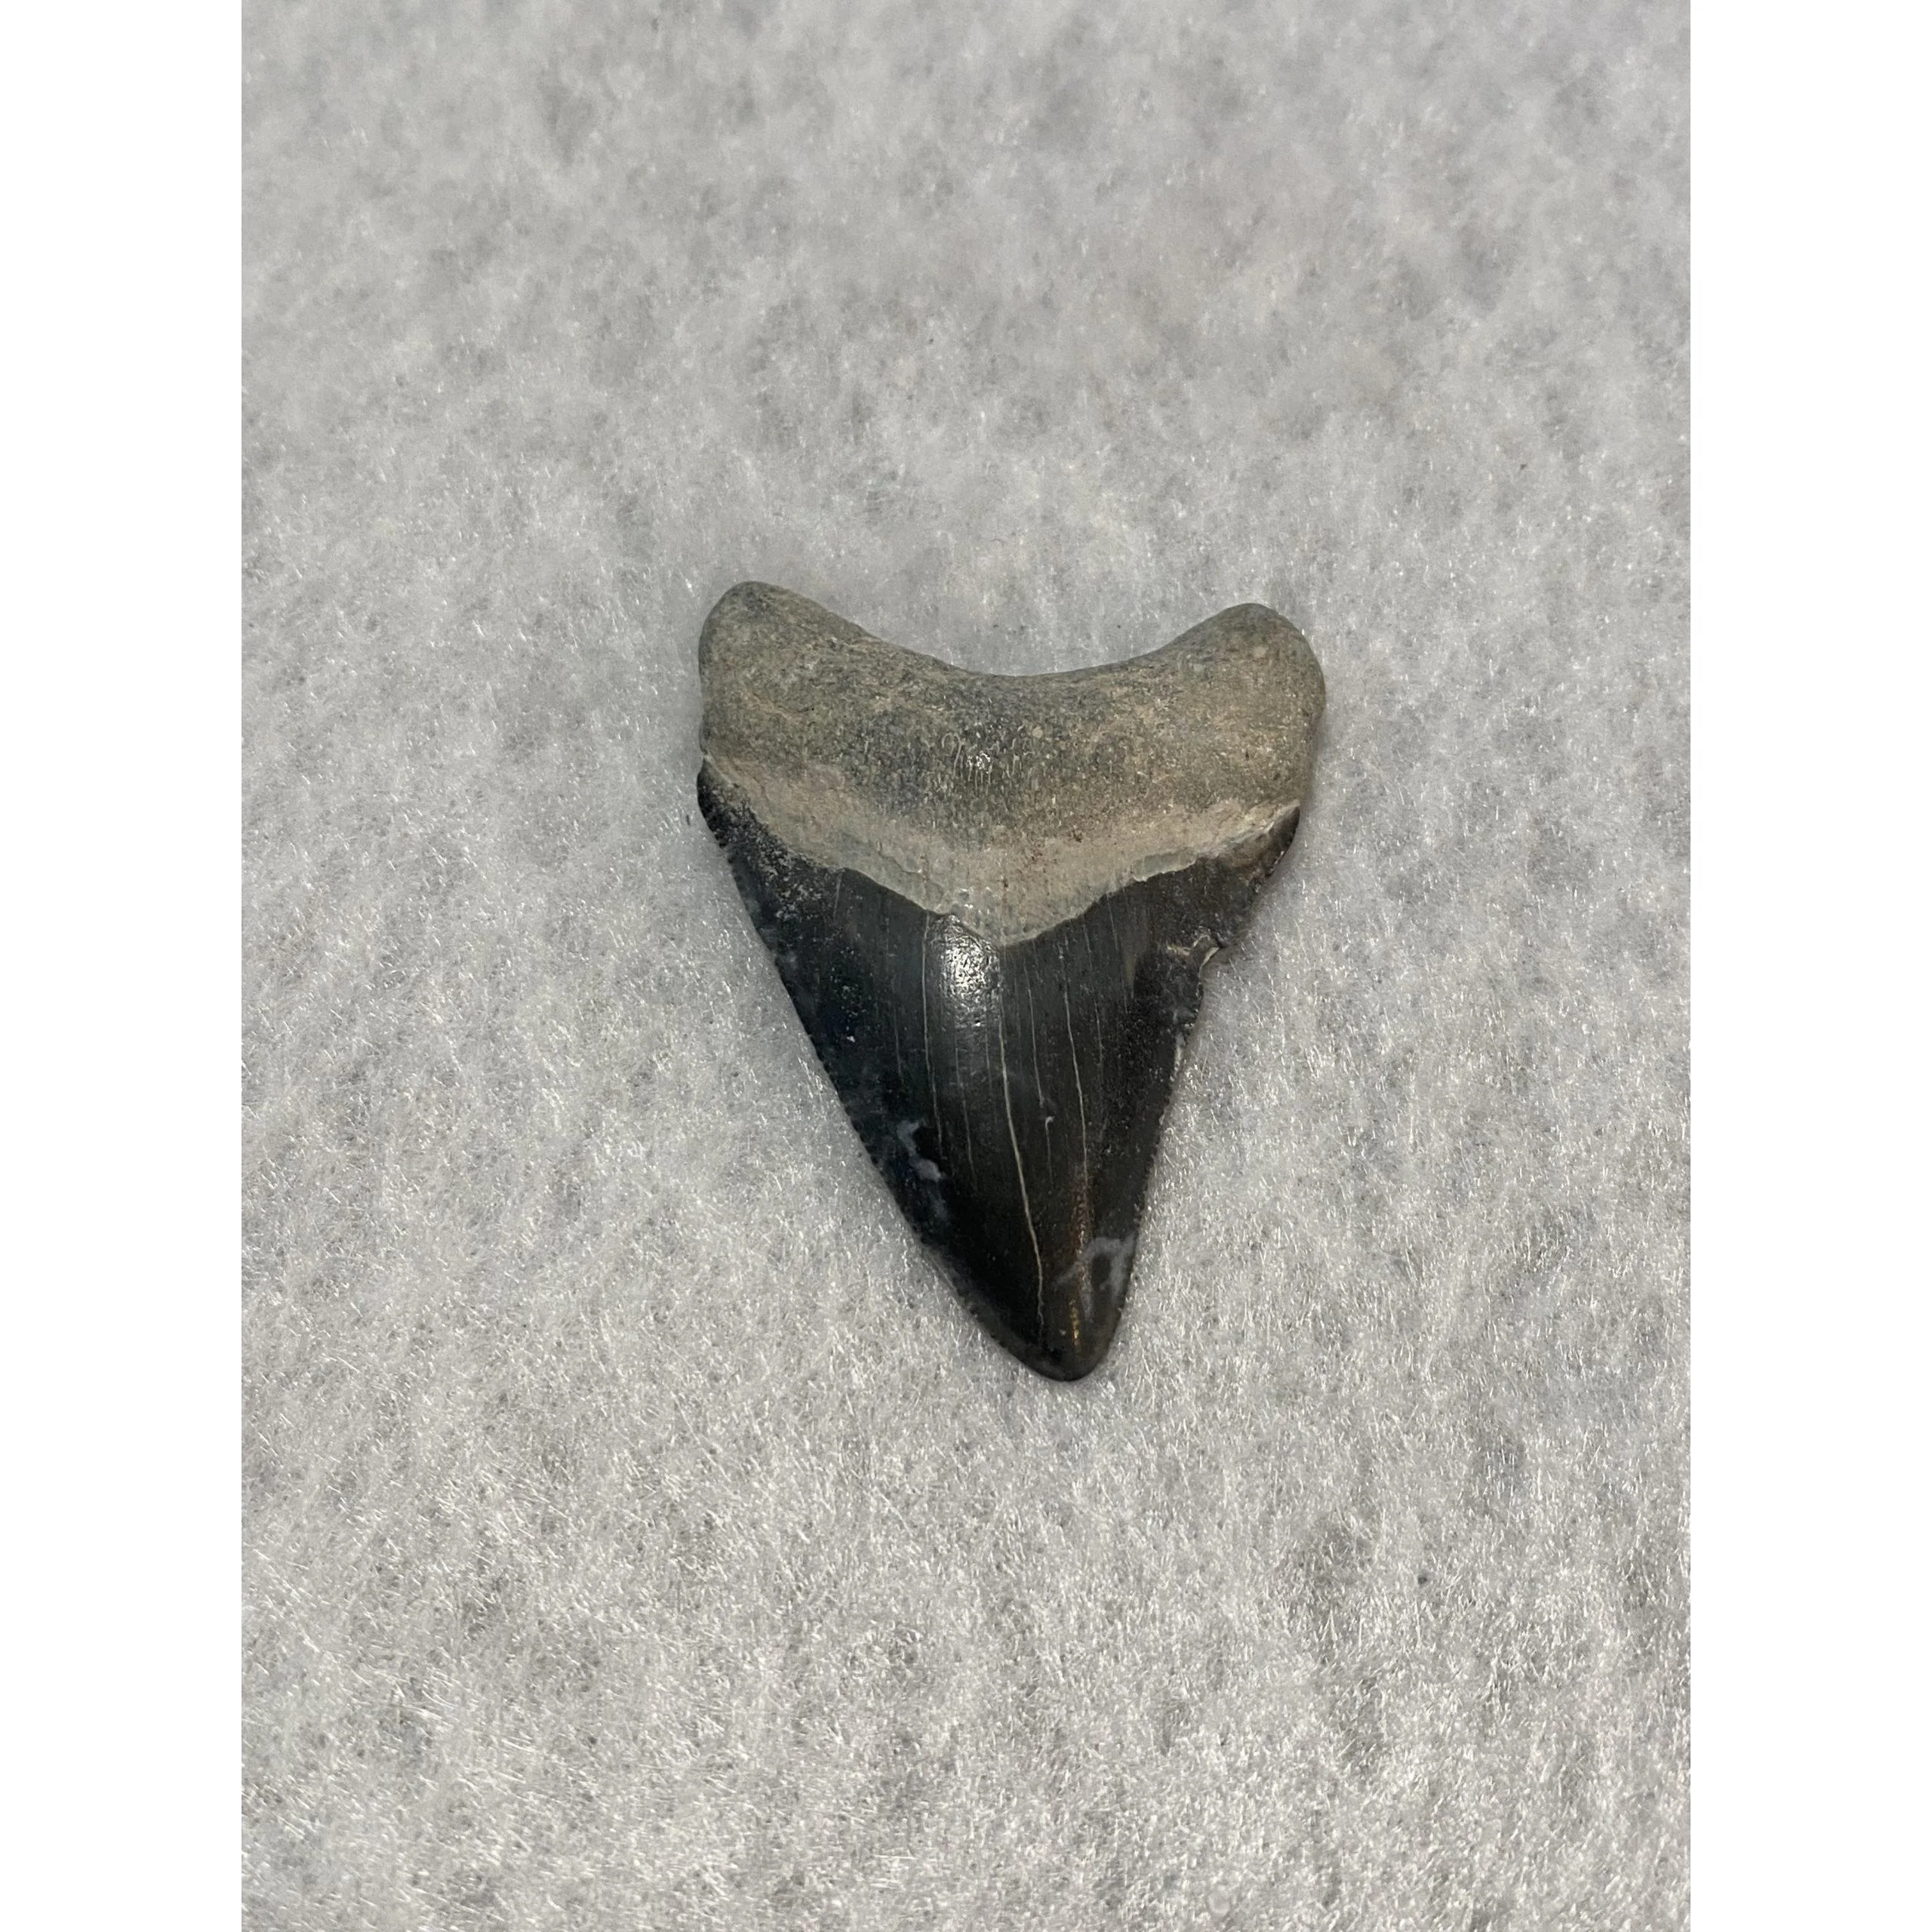 Megalodon Tooth  Bone Valley, Florida 2.16 inch Prehistoric Online